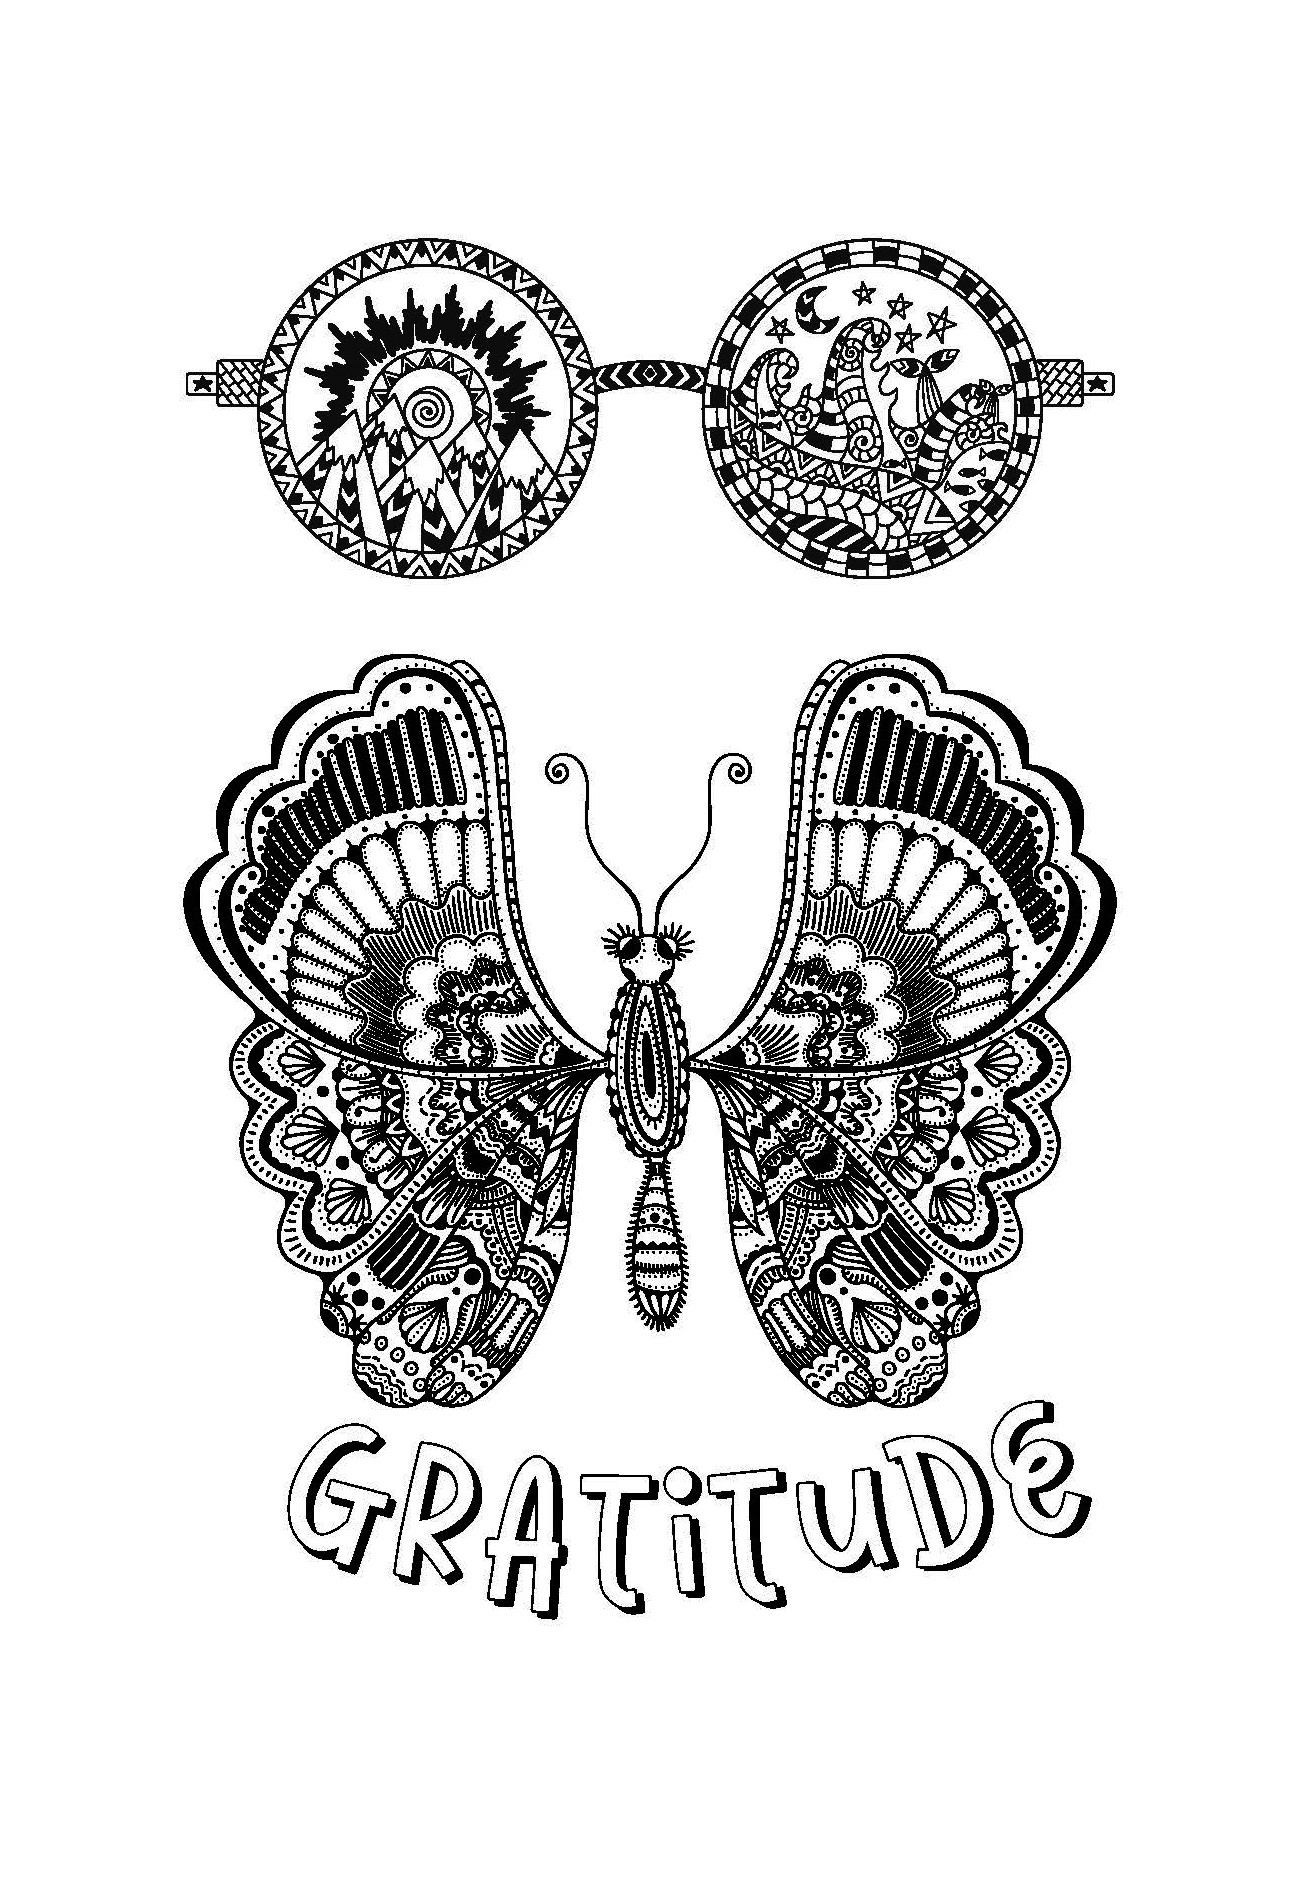 Gratitude Colouring Page - Digital Download